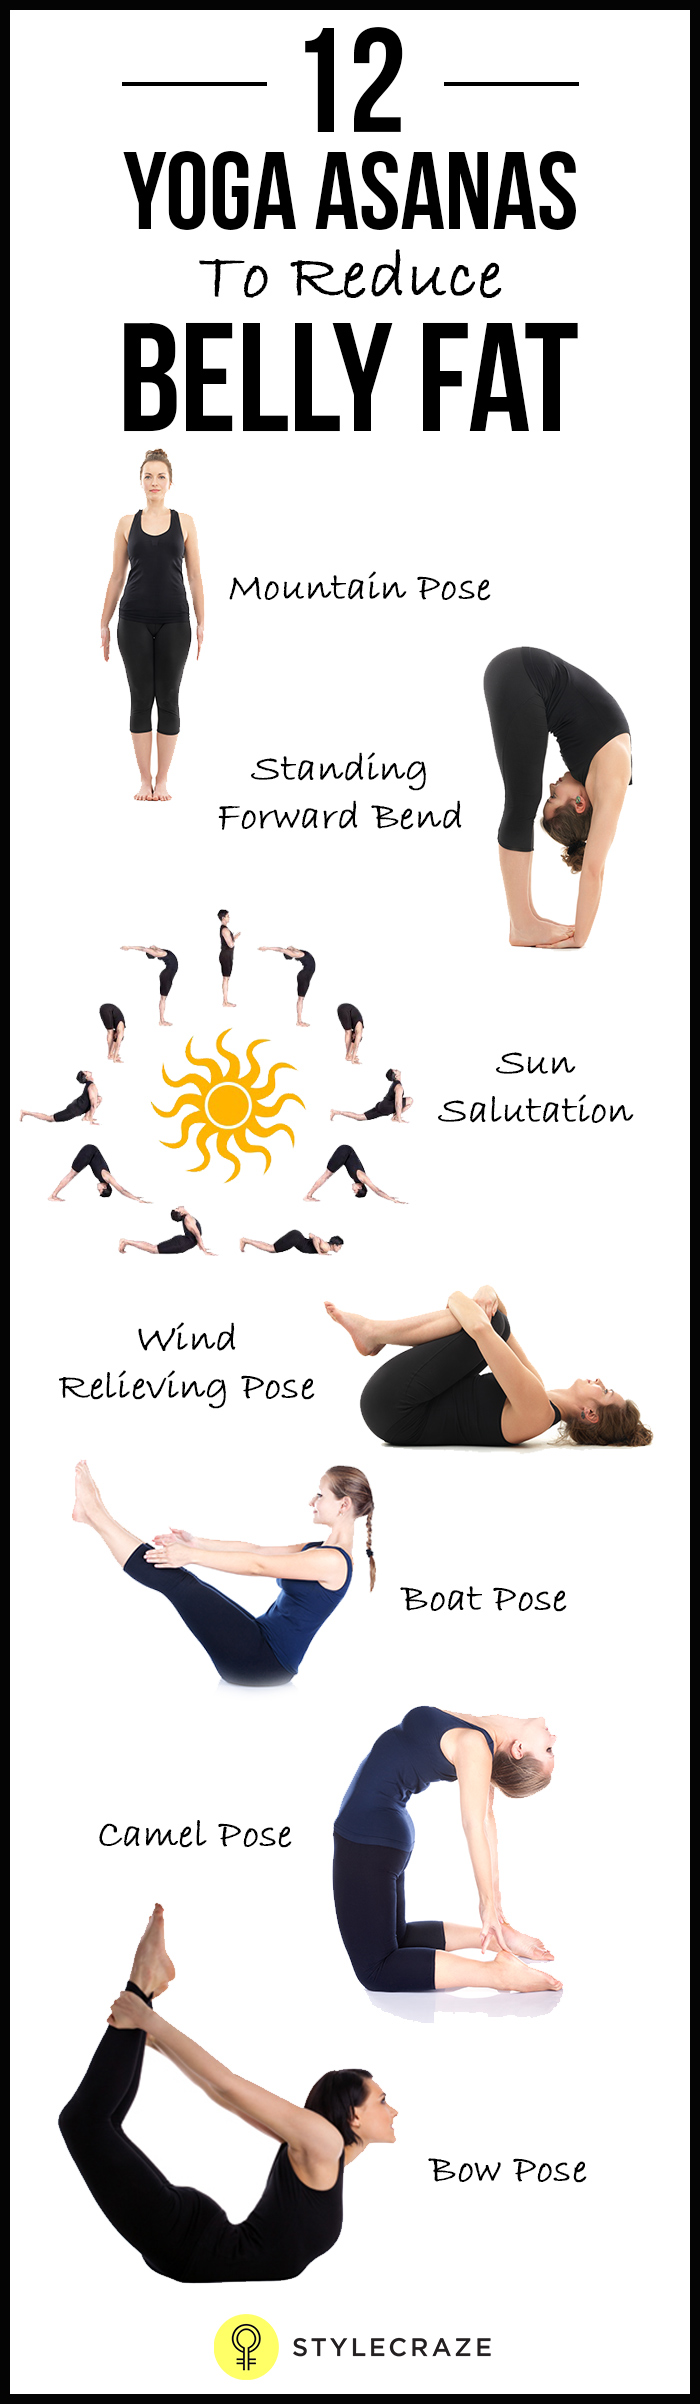 http://www.stylecraze.com/wp-content/uploads/2013/08/12-Yoga-Asanas-To-Reduce-Belly-Fat.jpg